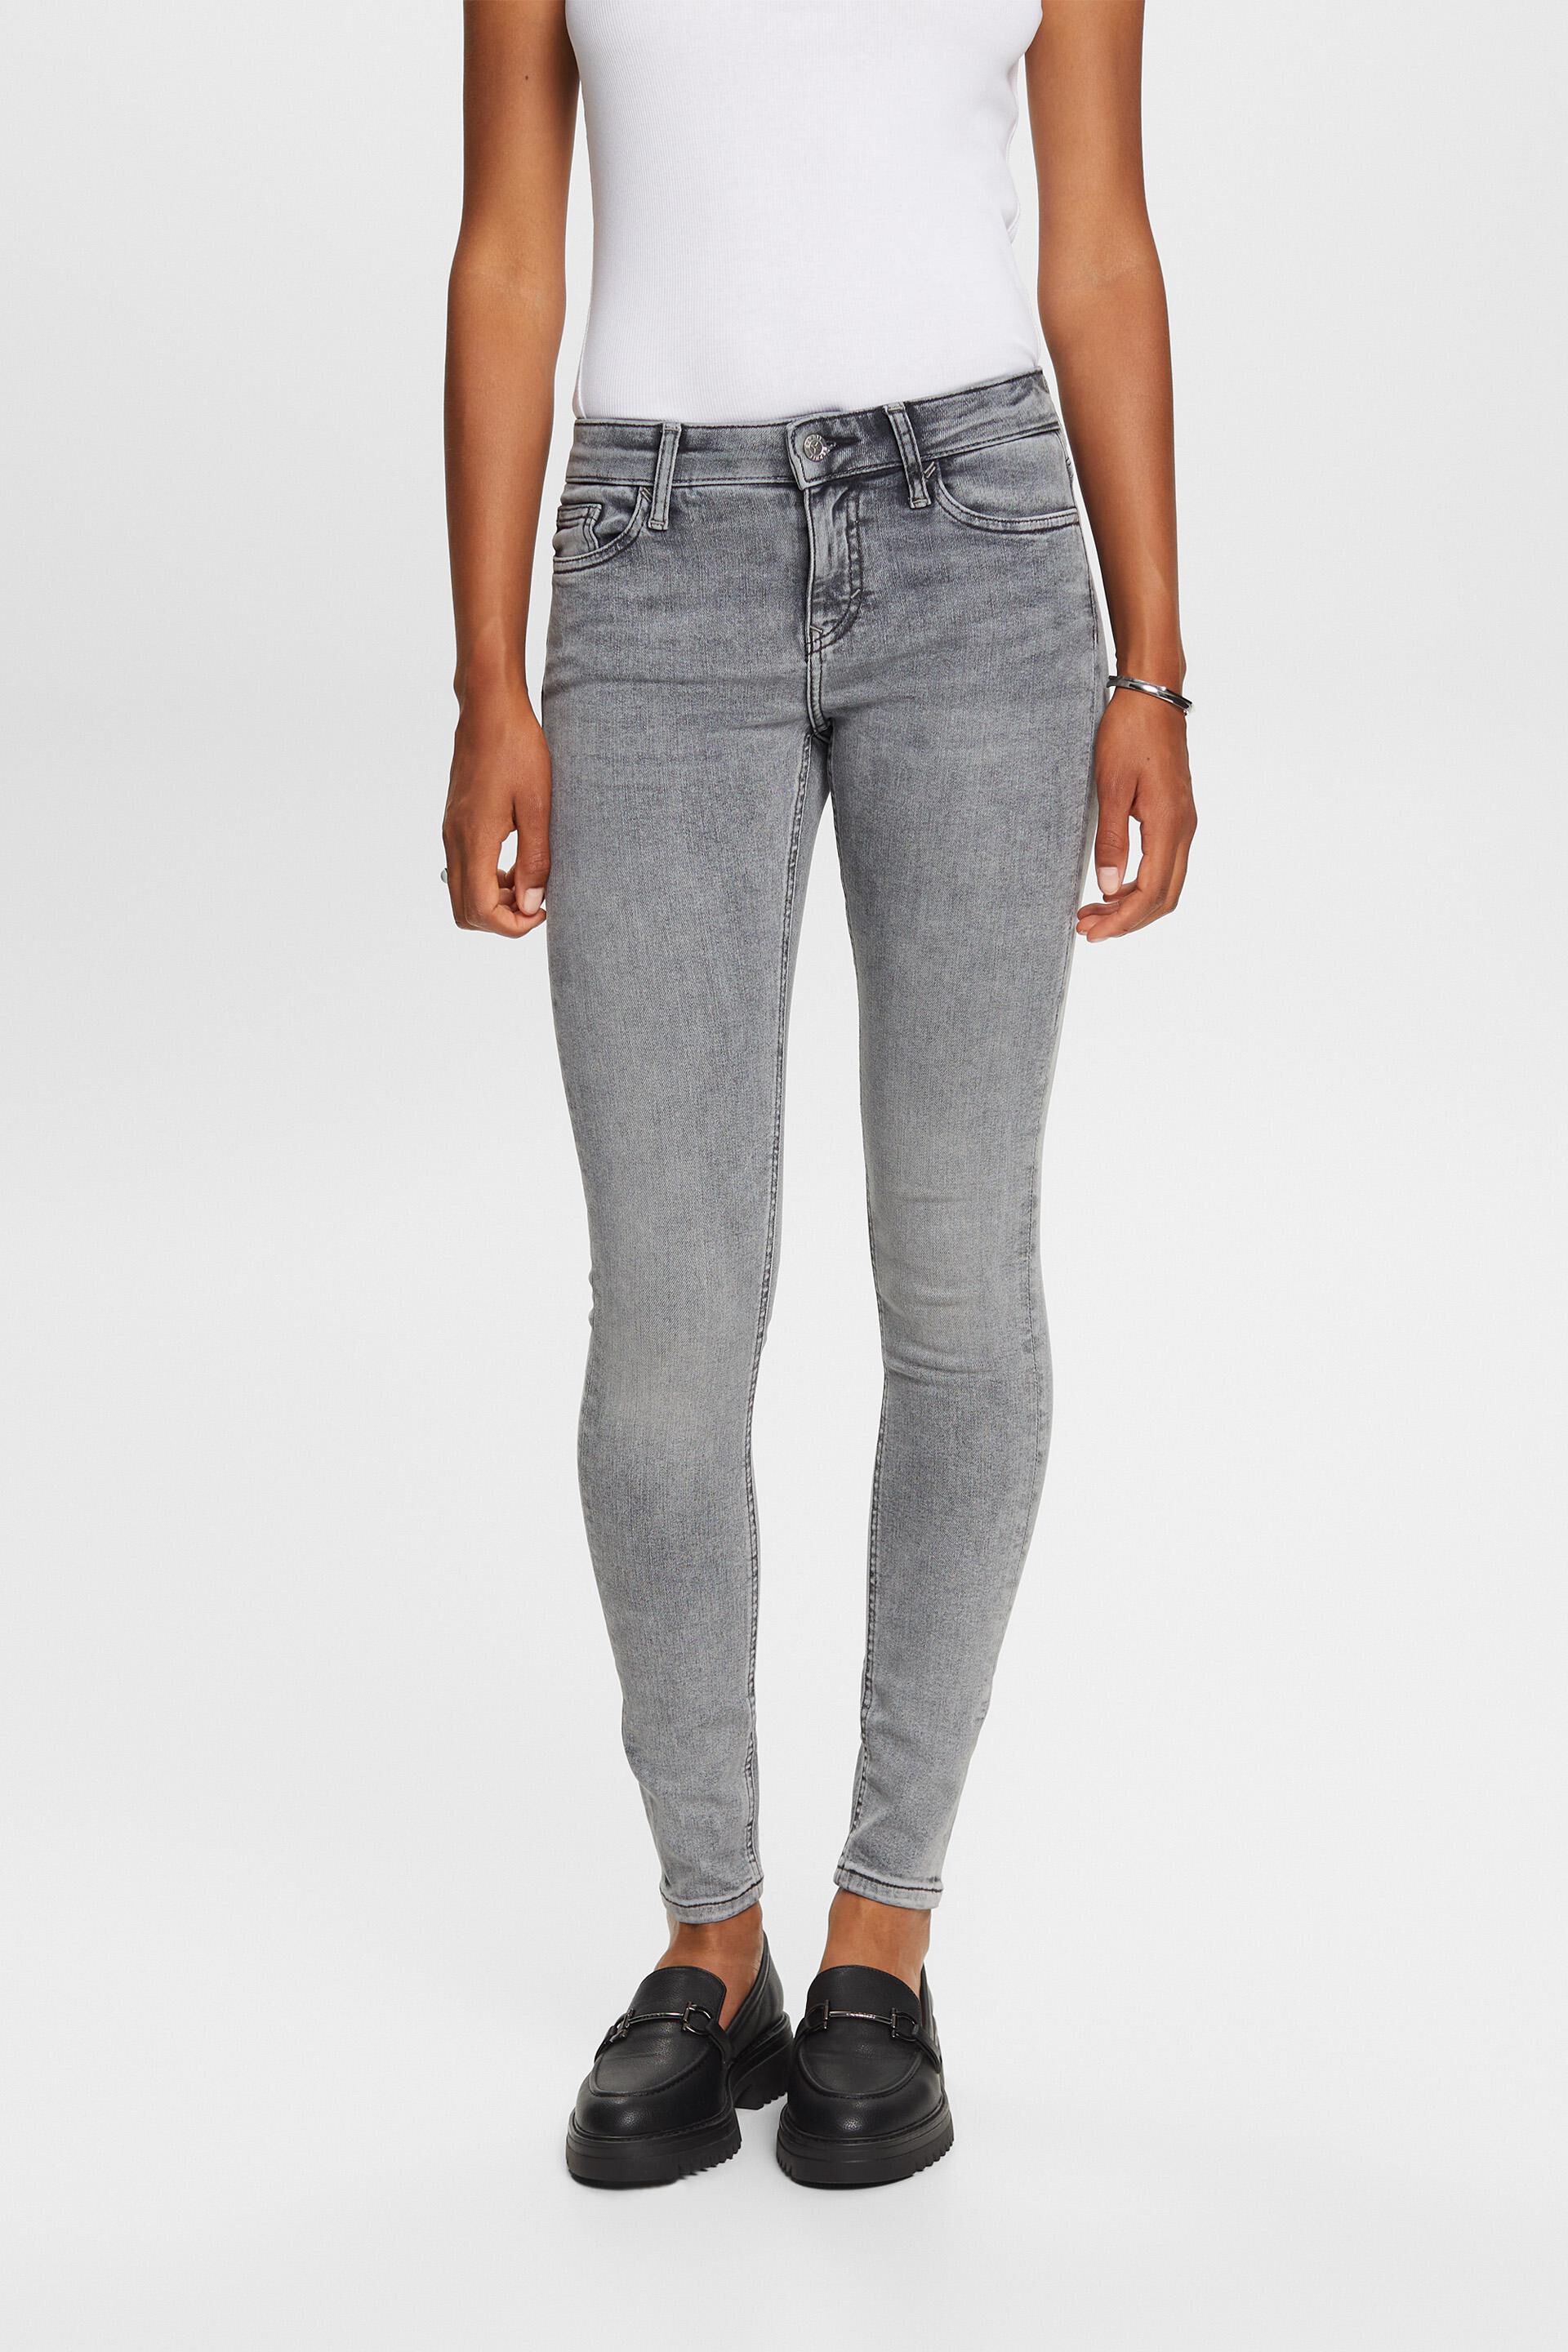 Esprit Damen Skinny Mid-Rise Jeans